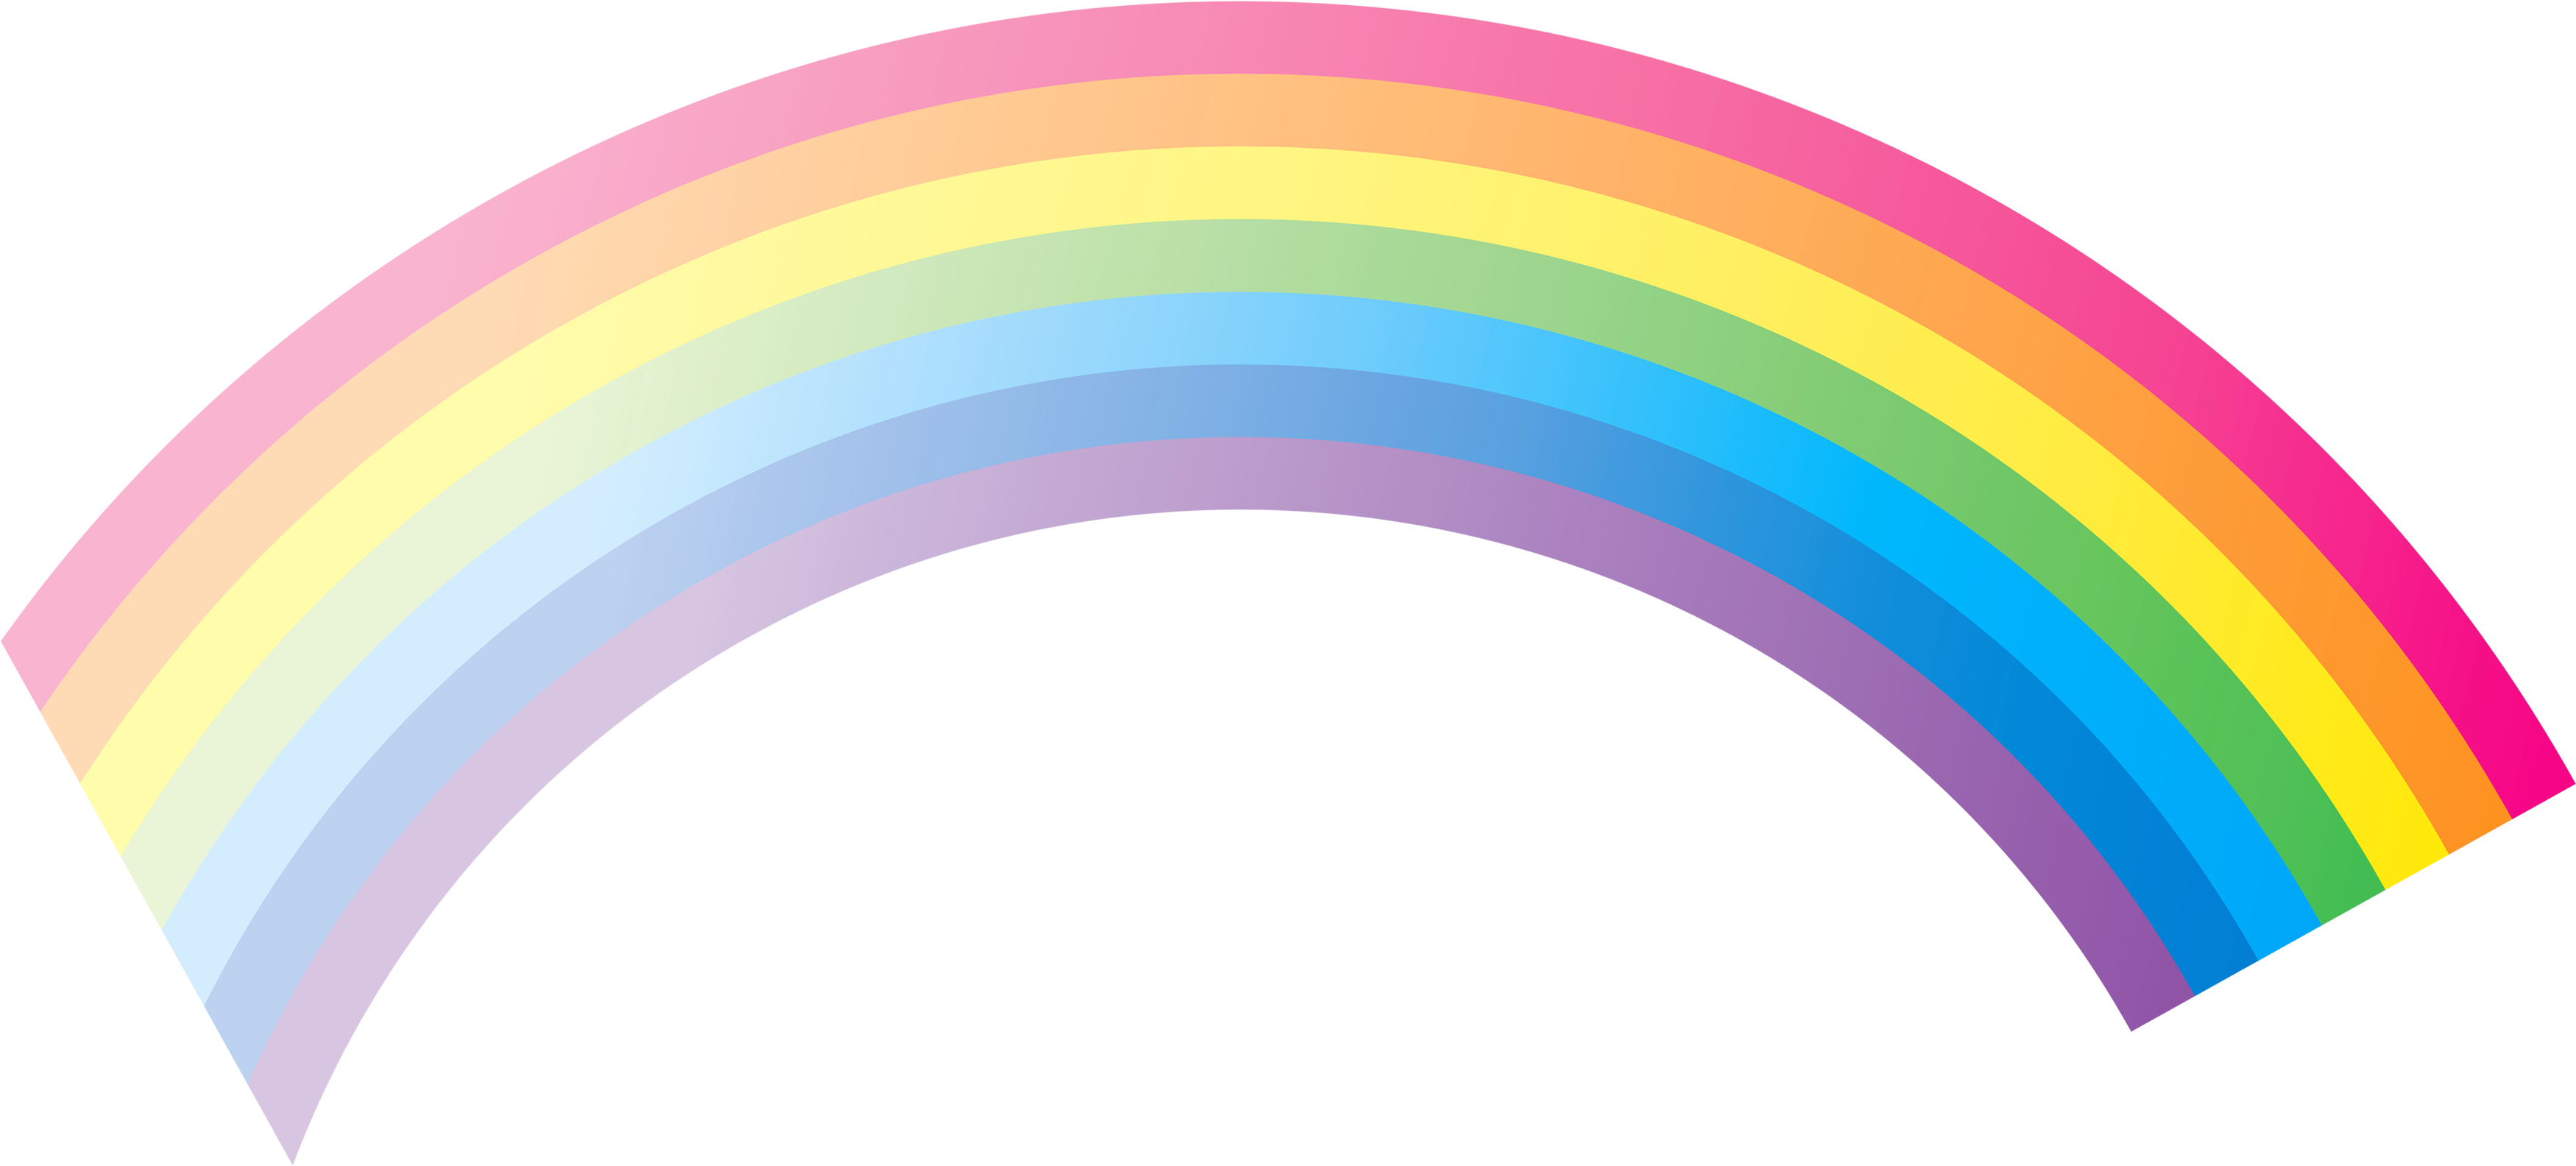 Cartoon Rainbow Png - ClipArt Best